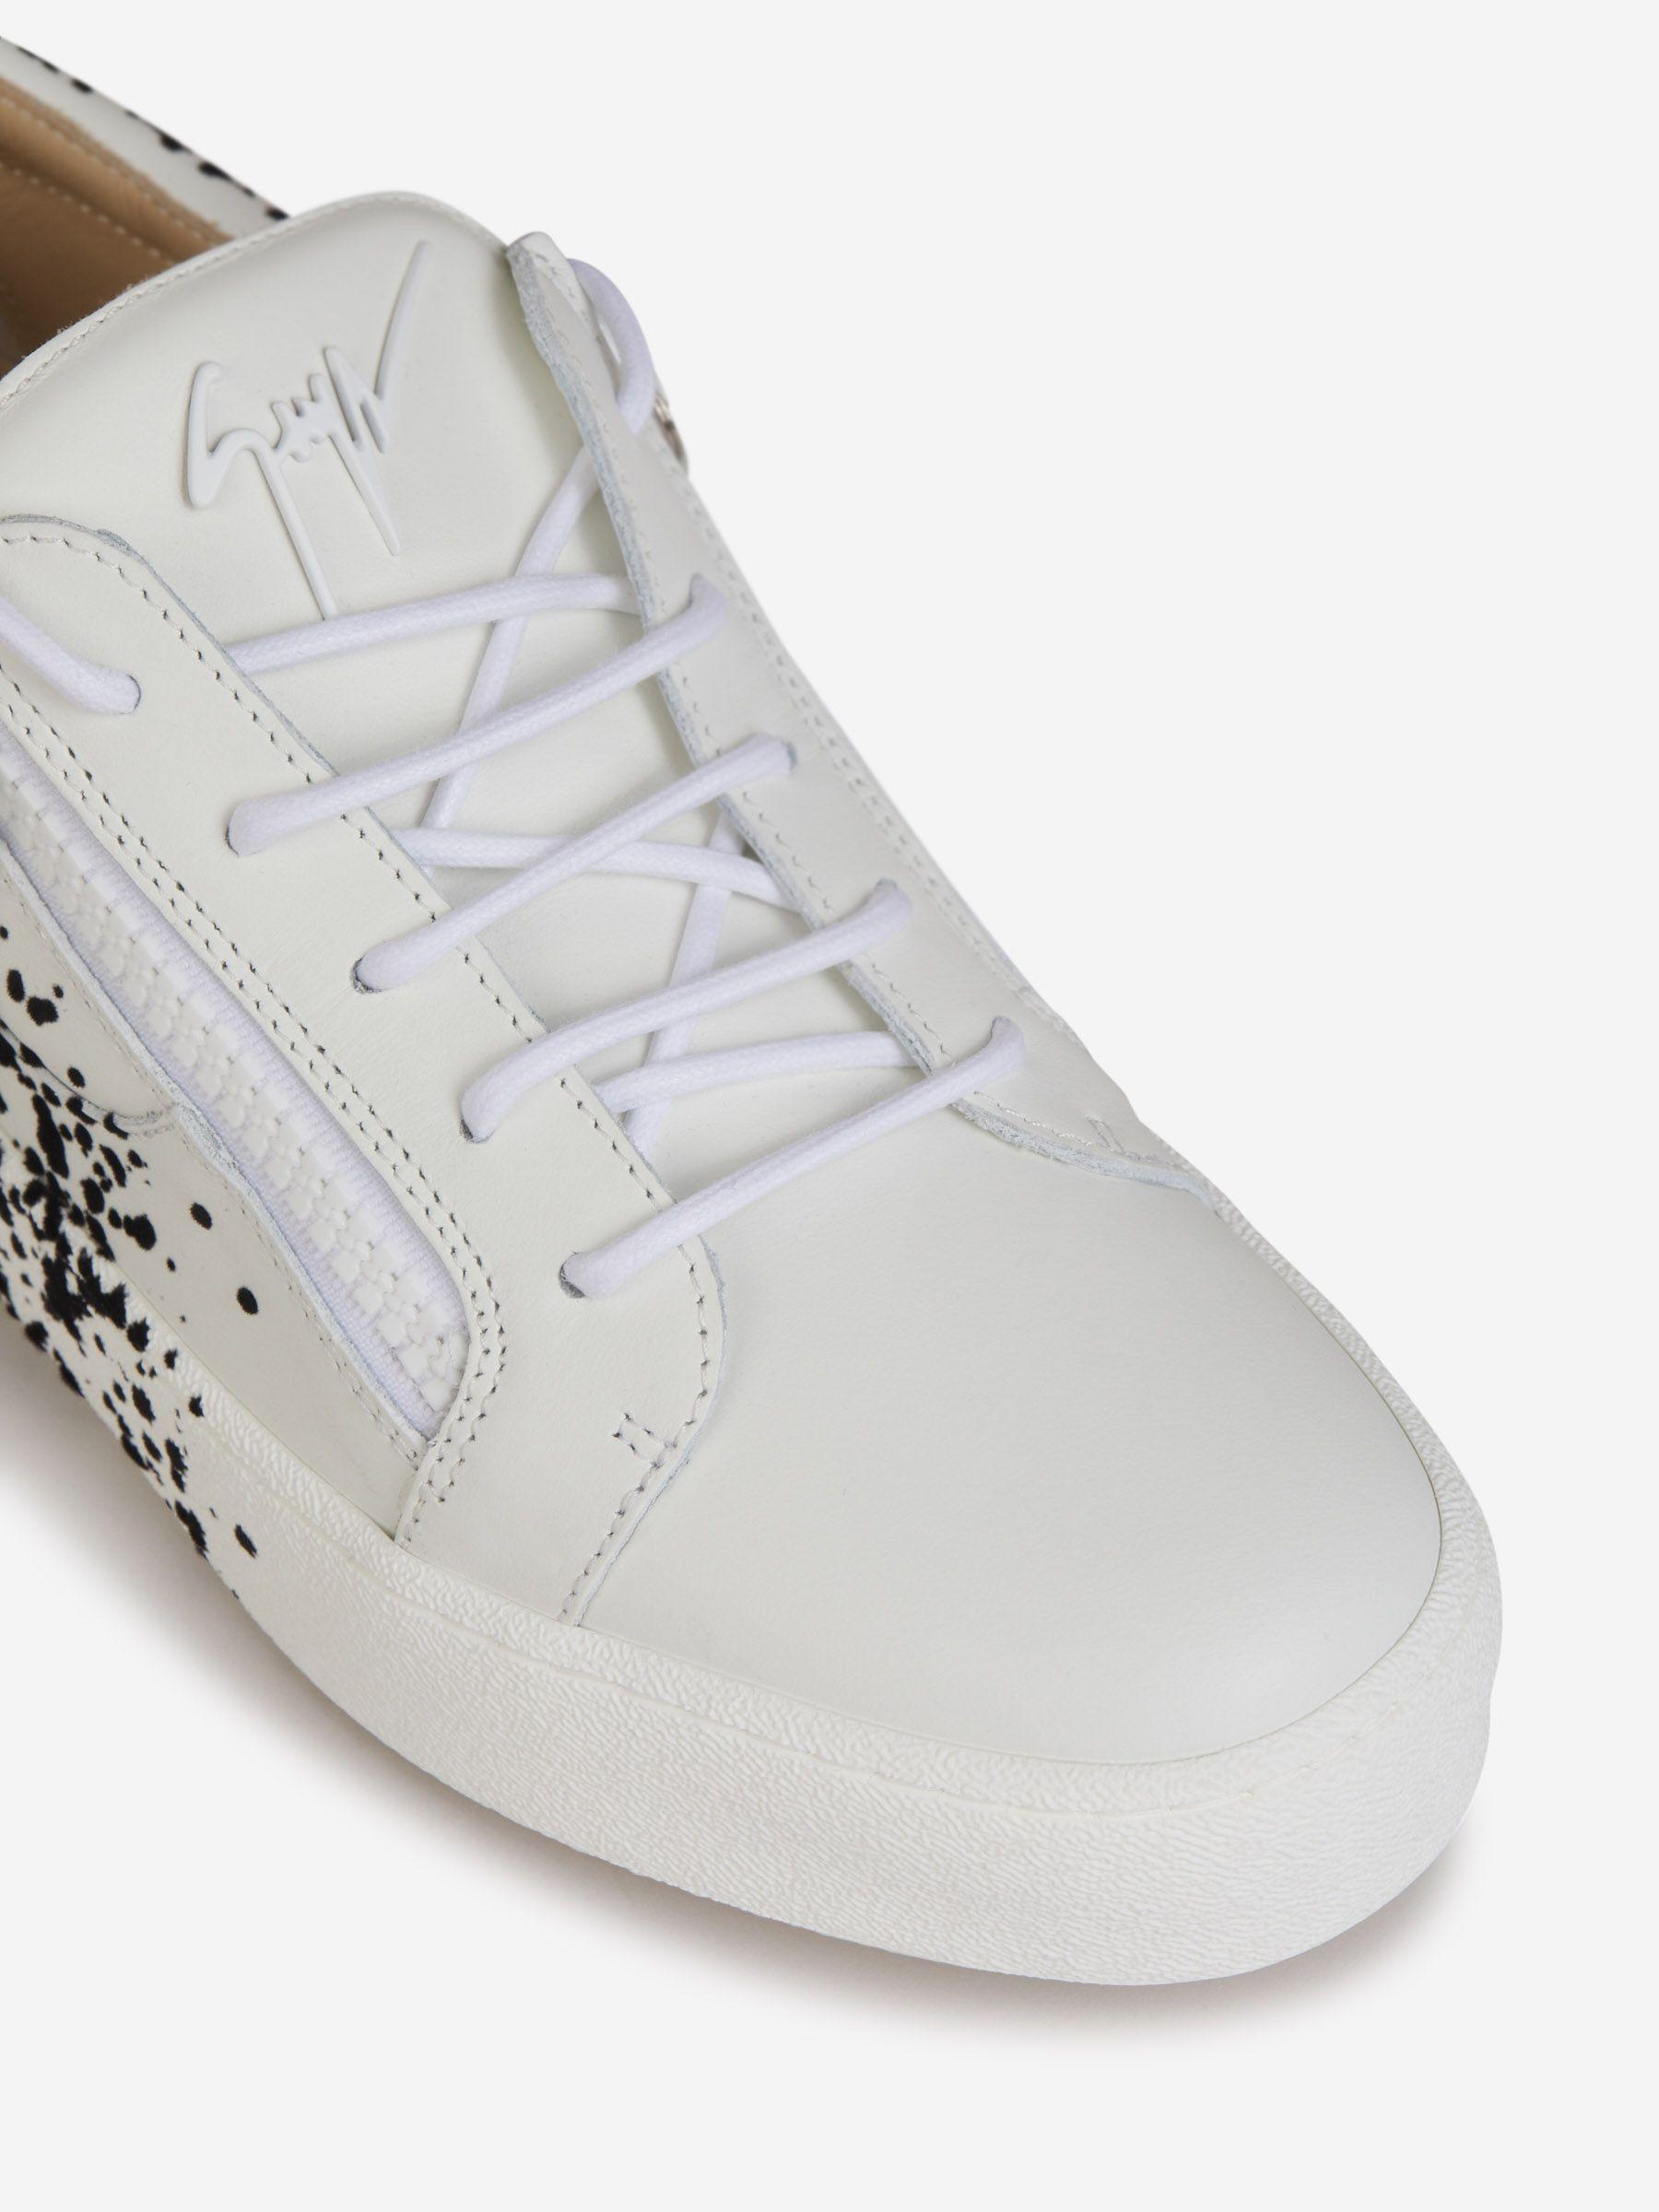 Giuseppe Zanotti Frankie Spray Sneakers in White for Men | Lyst